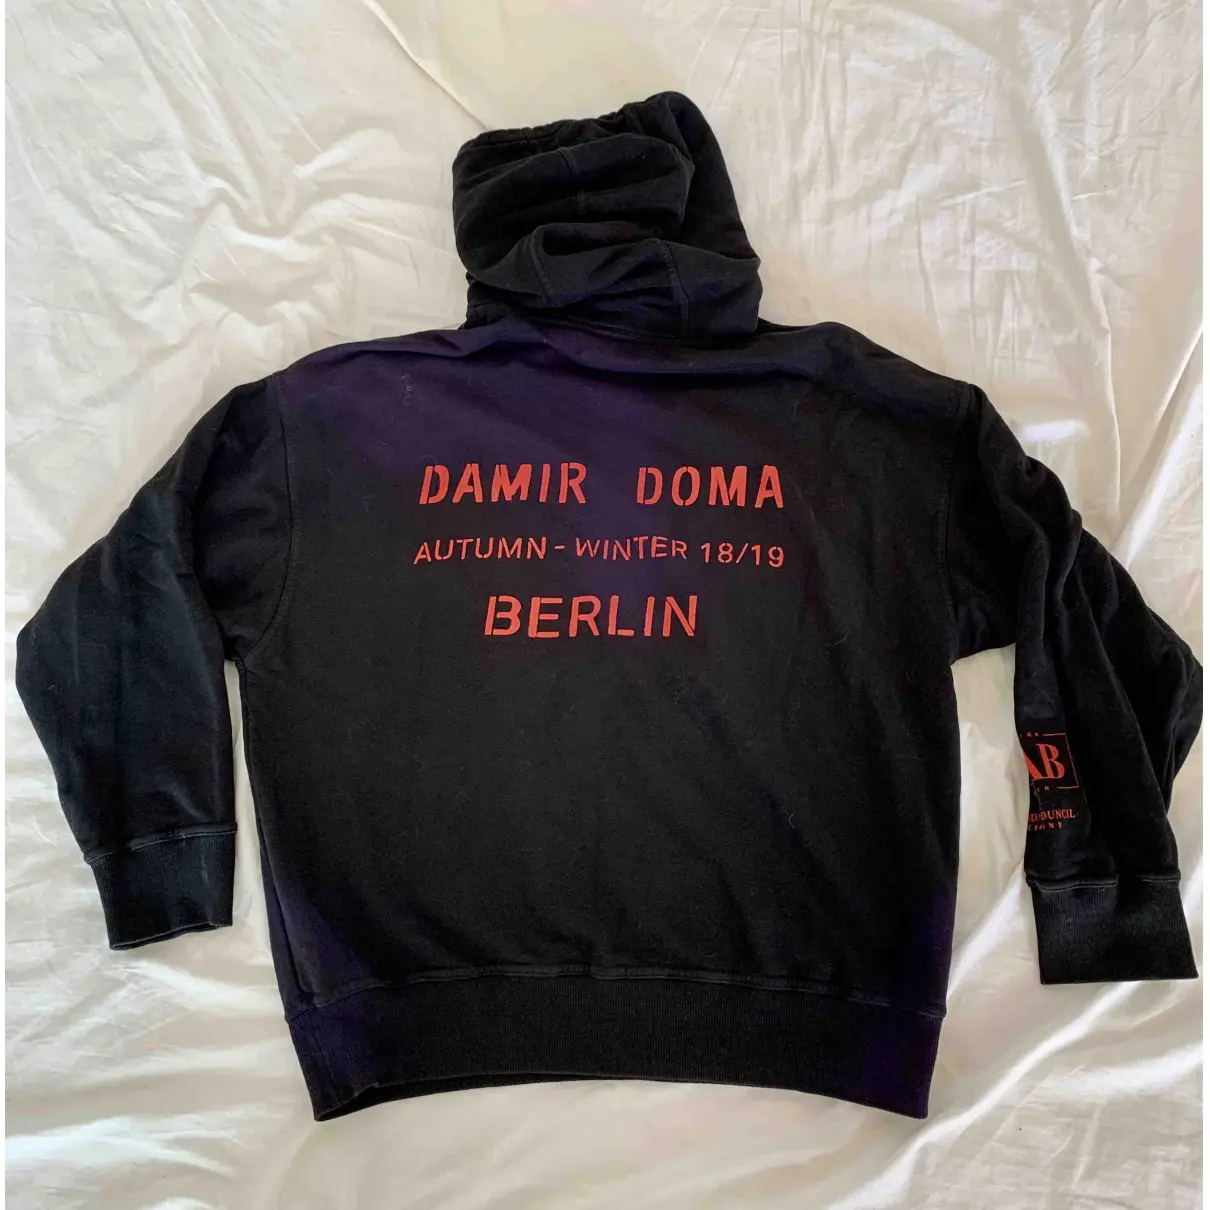 Buy Damir Doma Black Cotton Knitwear & Sweatshirt online